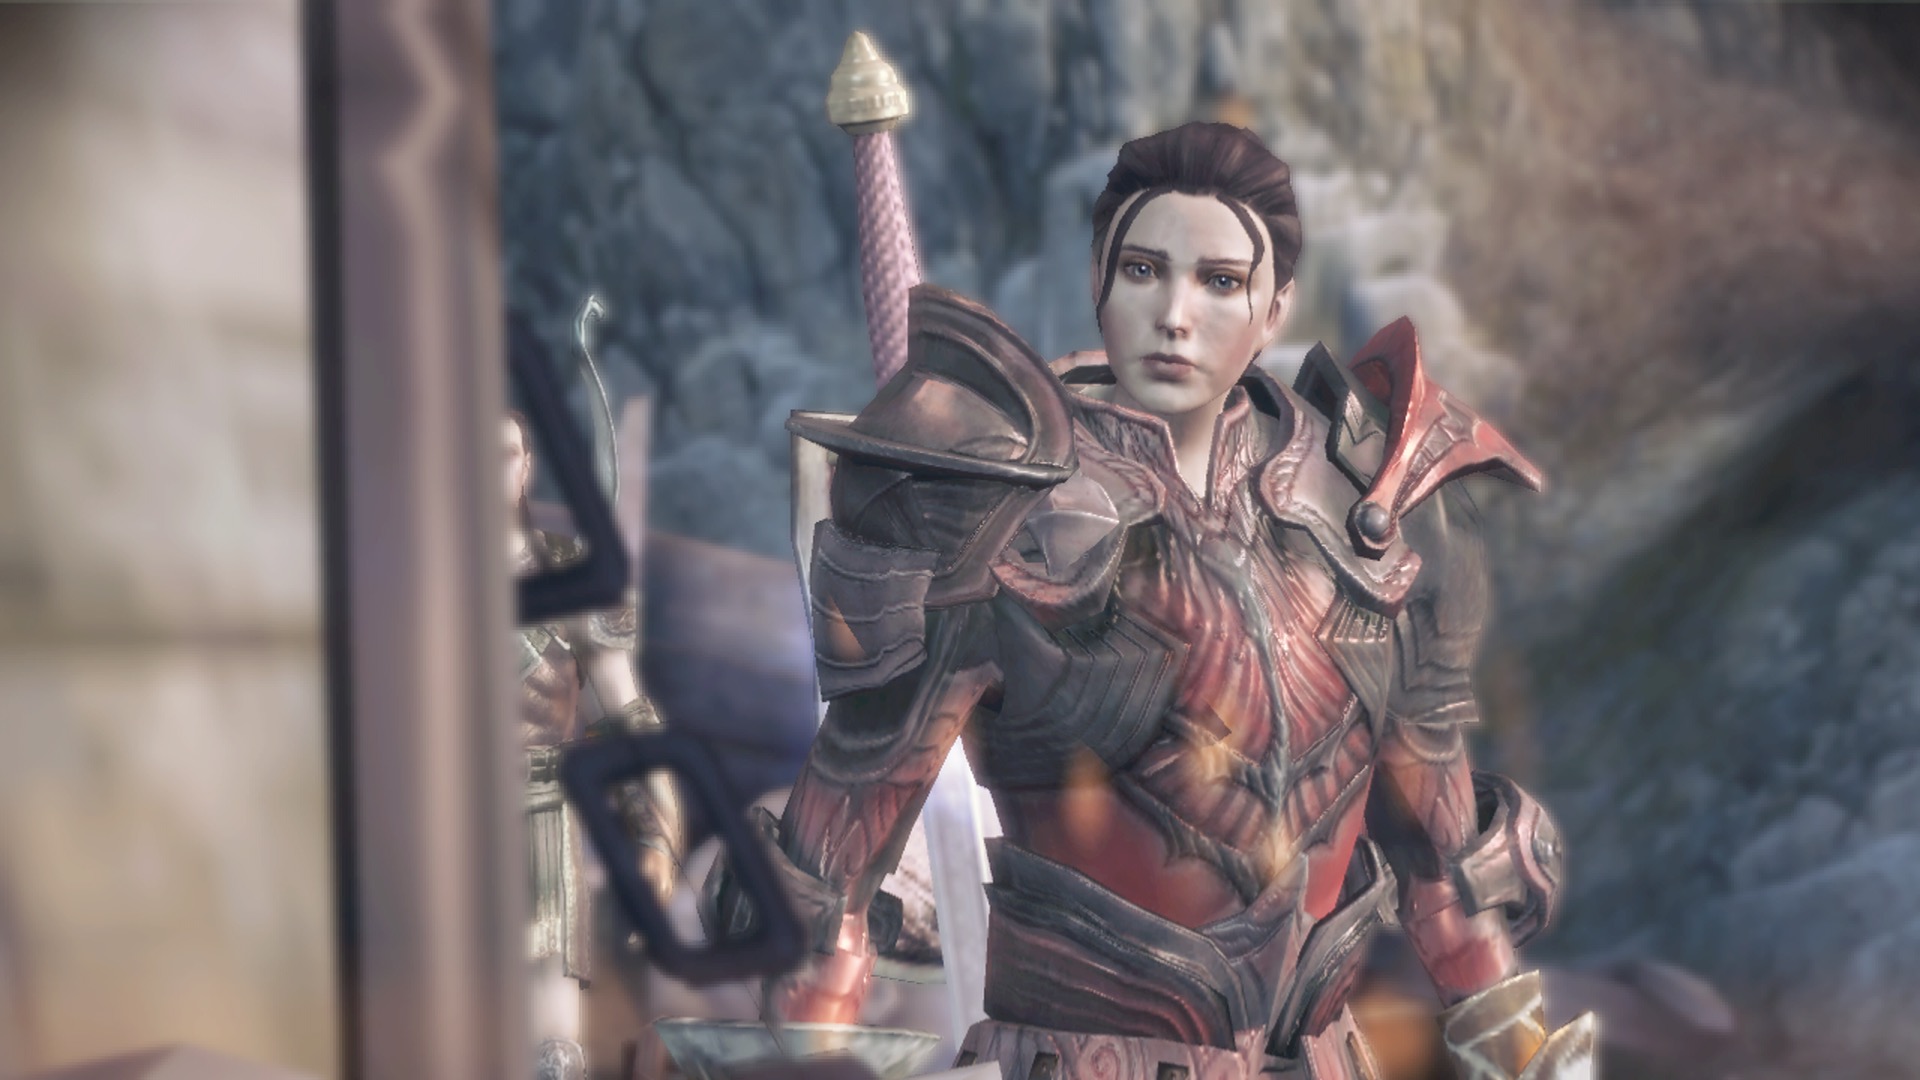 More Dragon Age: Origins Awakening Characters: Mhairi and Sigrun